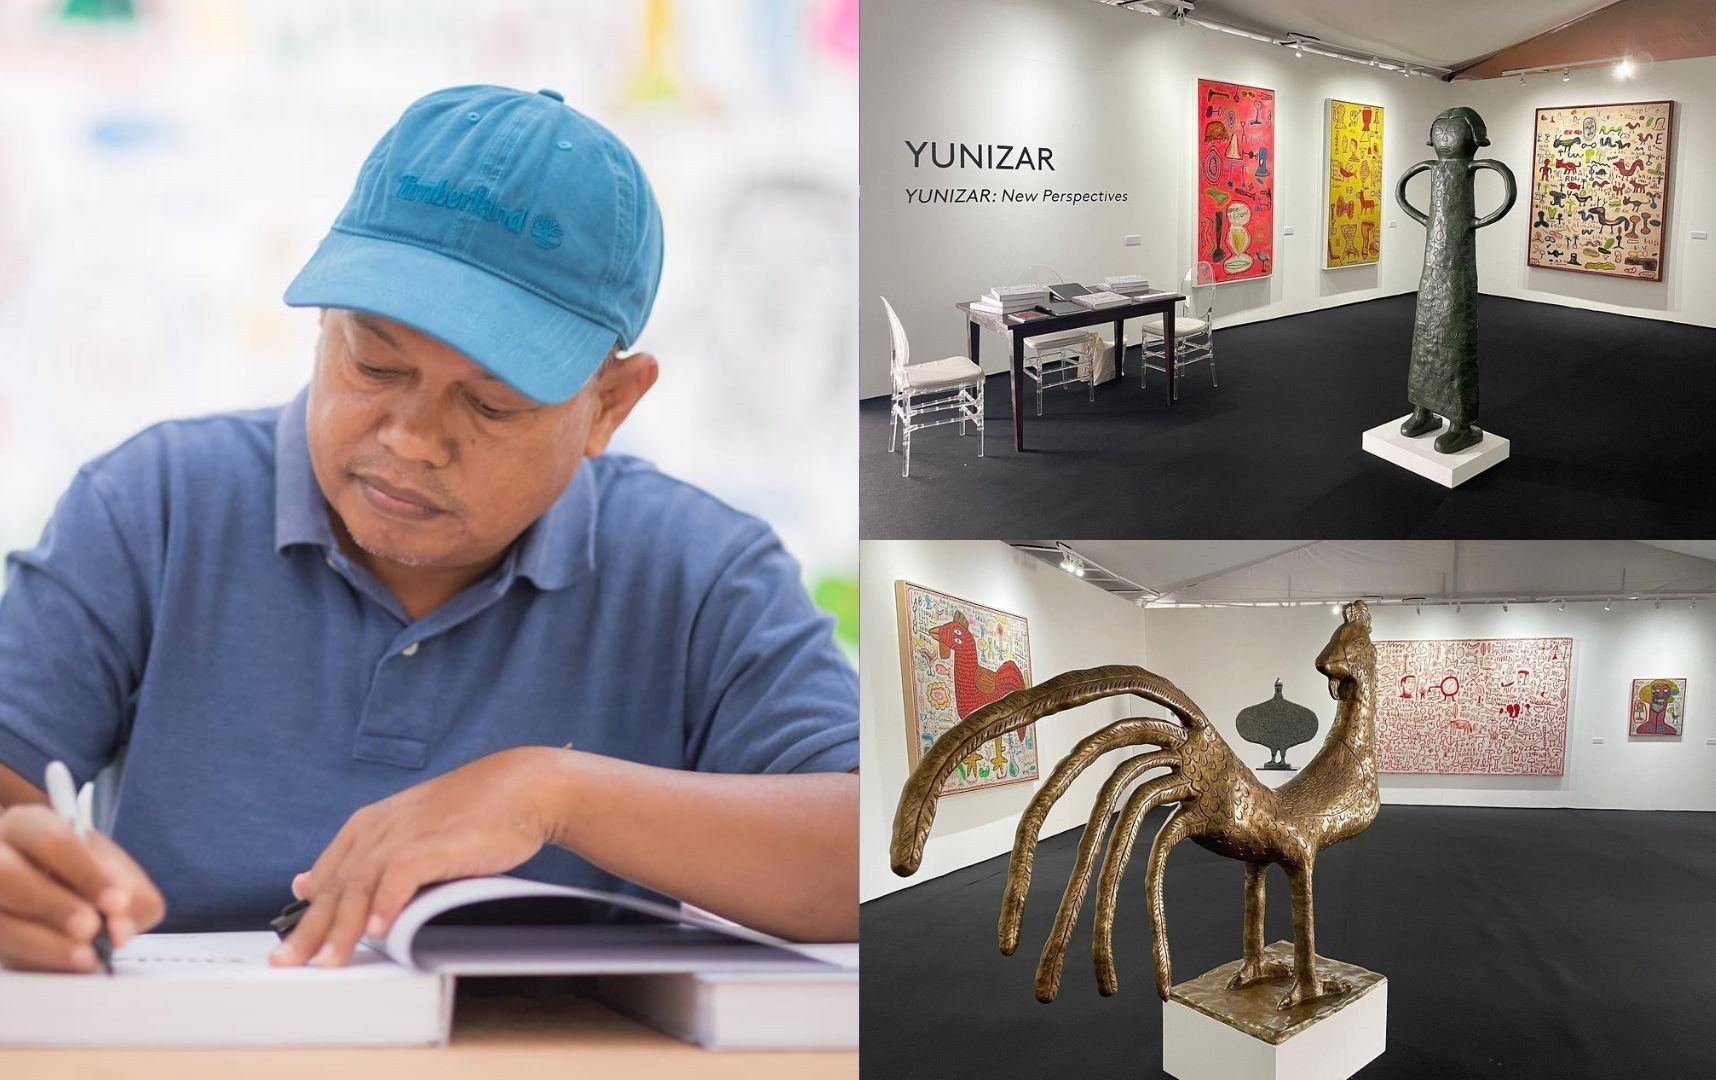 Indonesian artist Yunizar on his artistry transcending time, borders, cultures